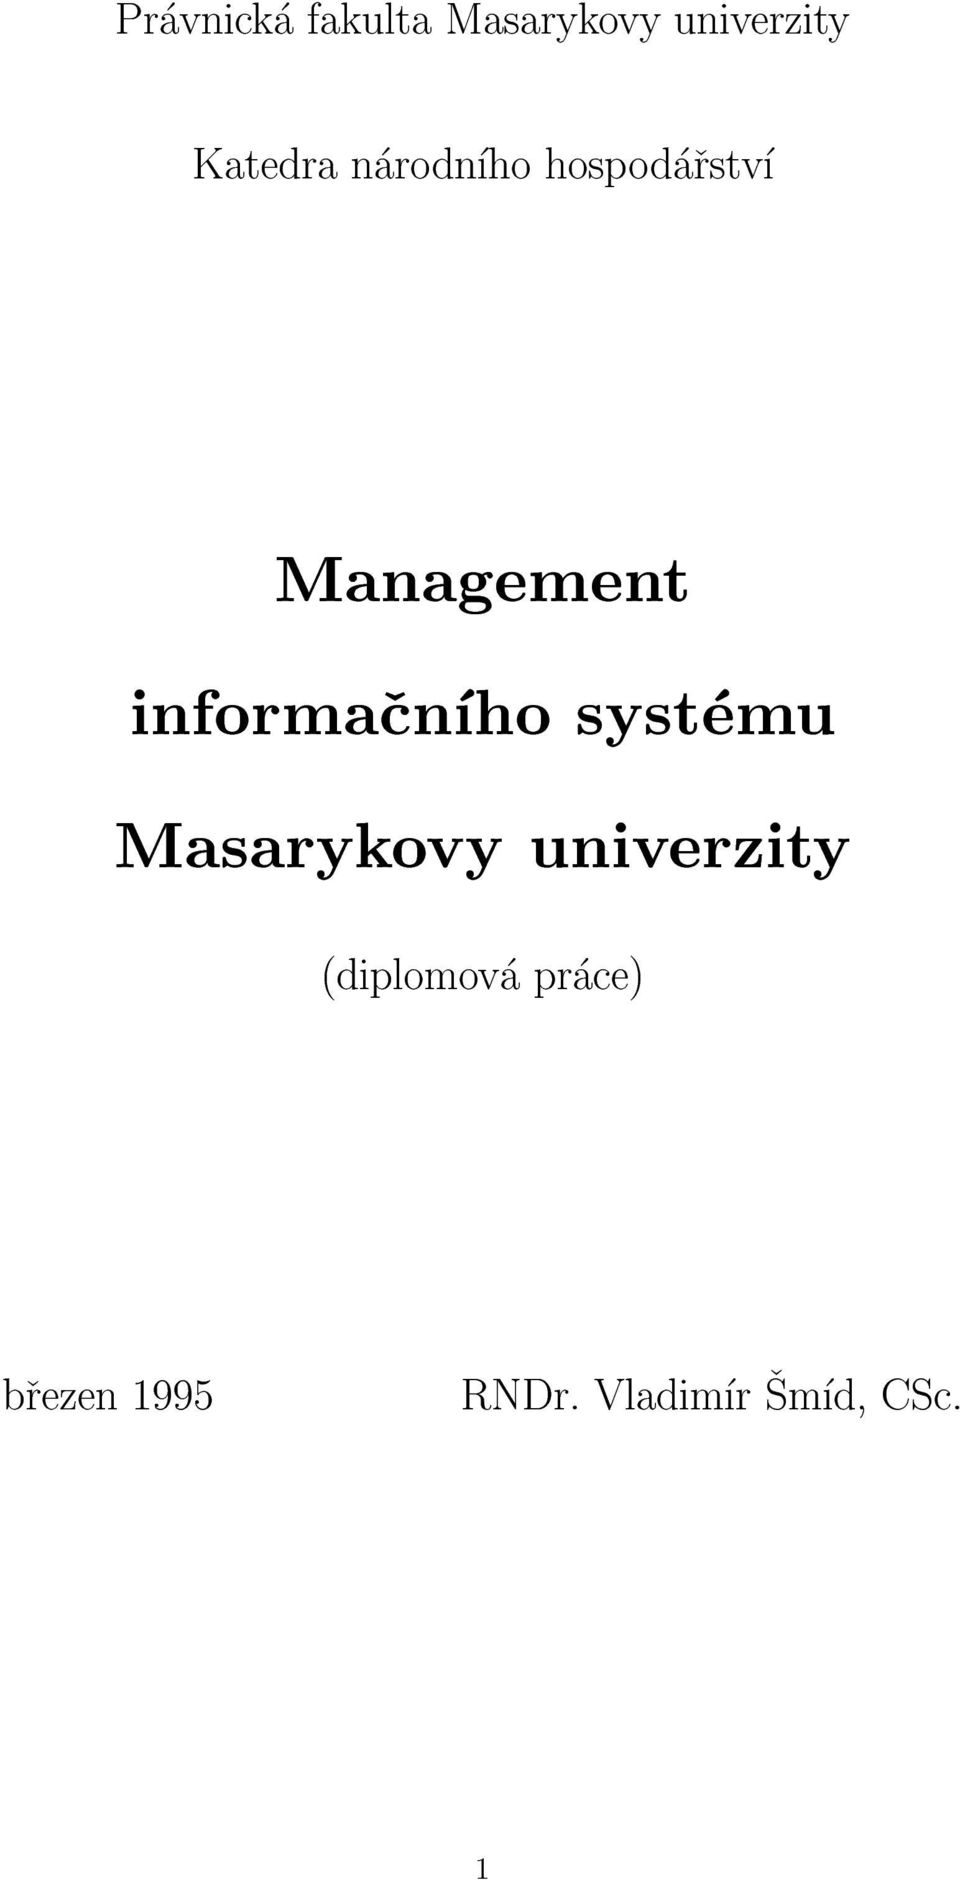 informacnho systemu Masarykovy univerzity